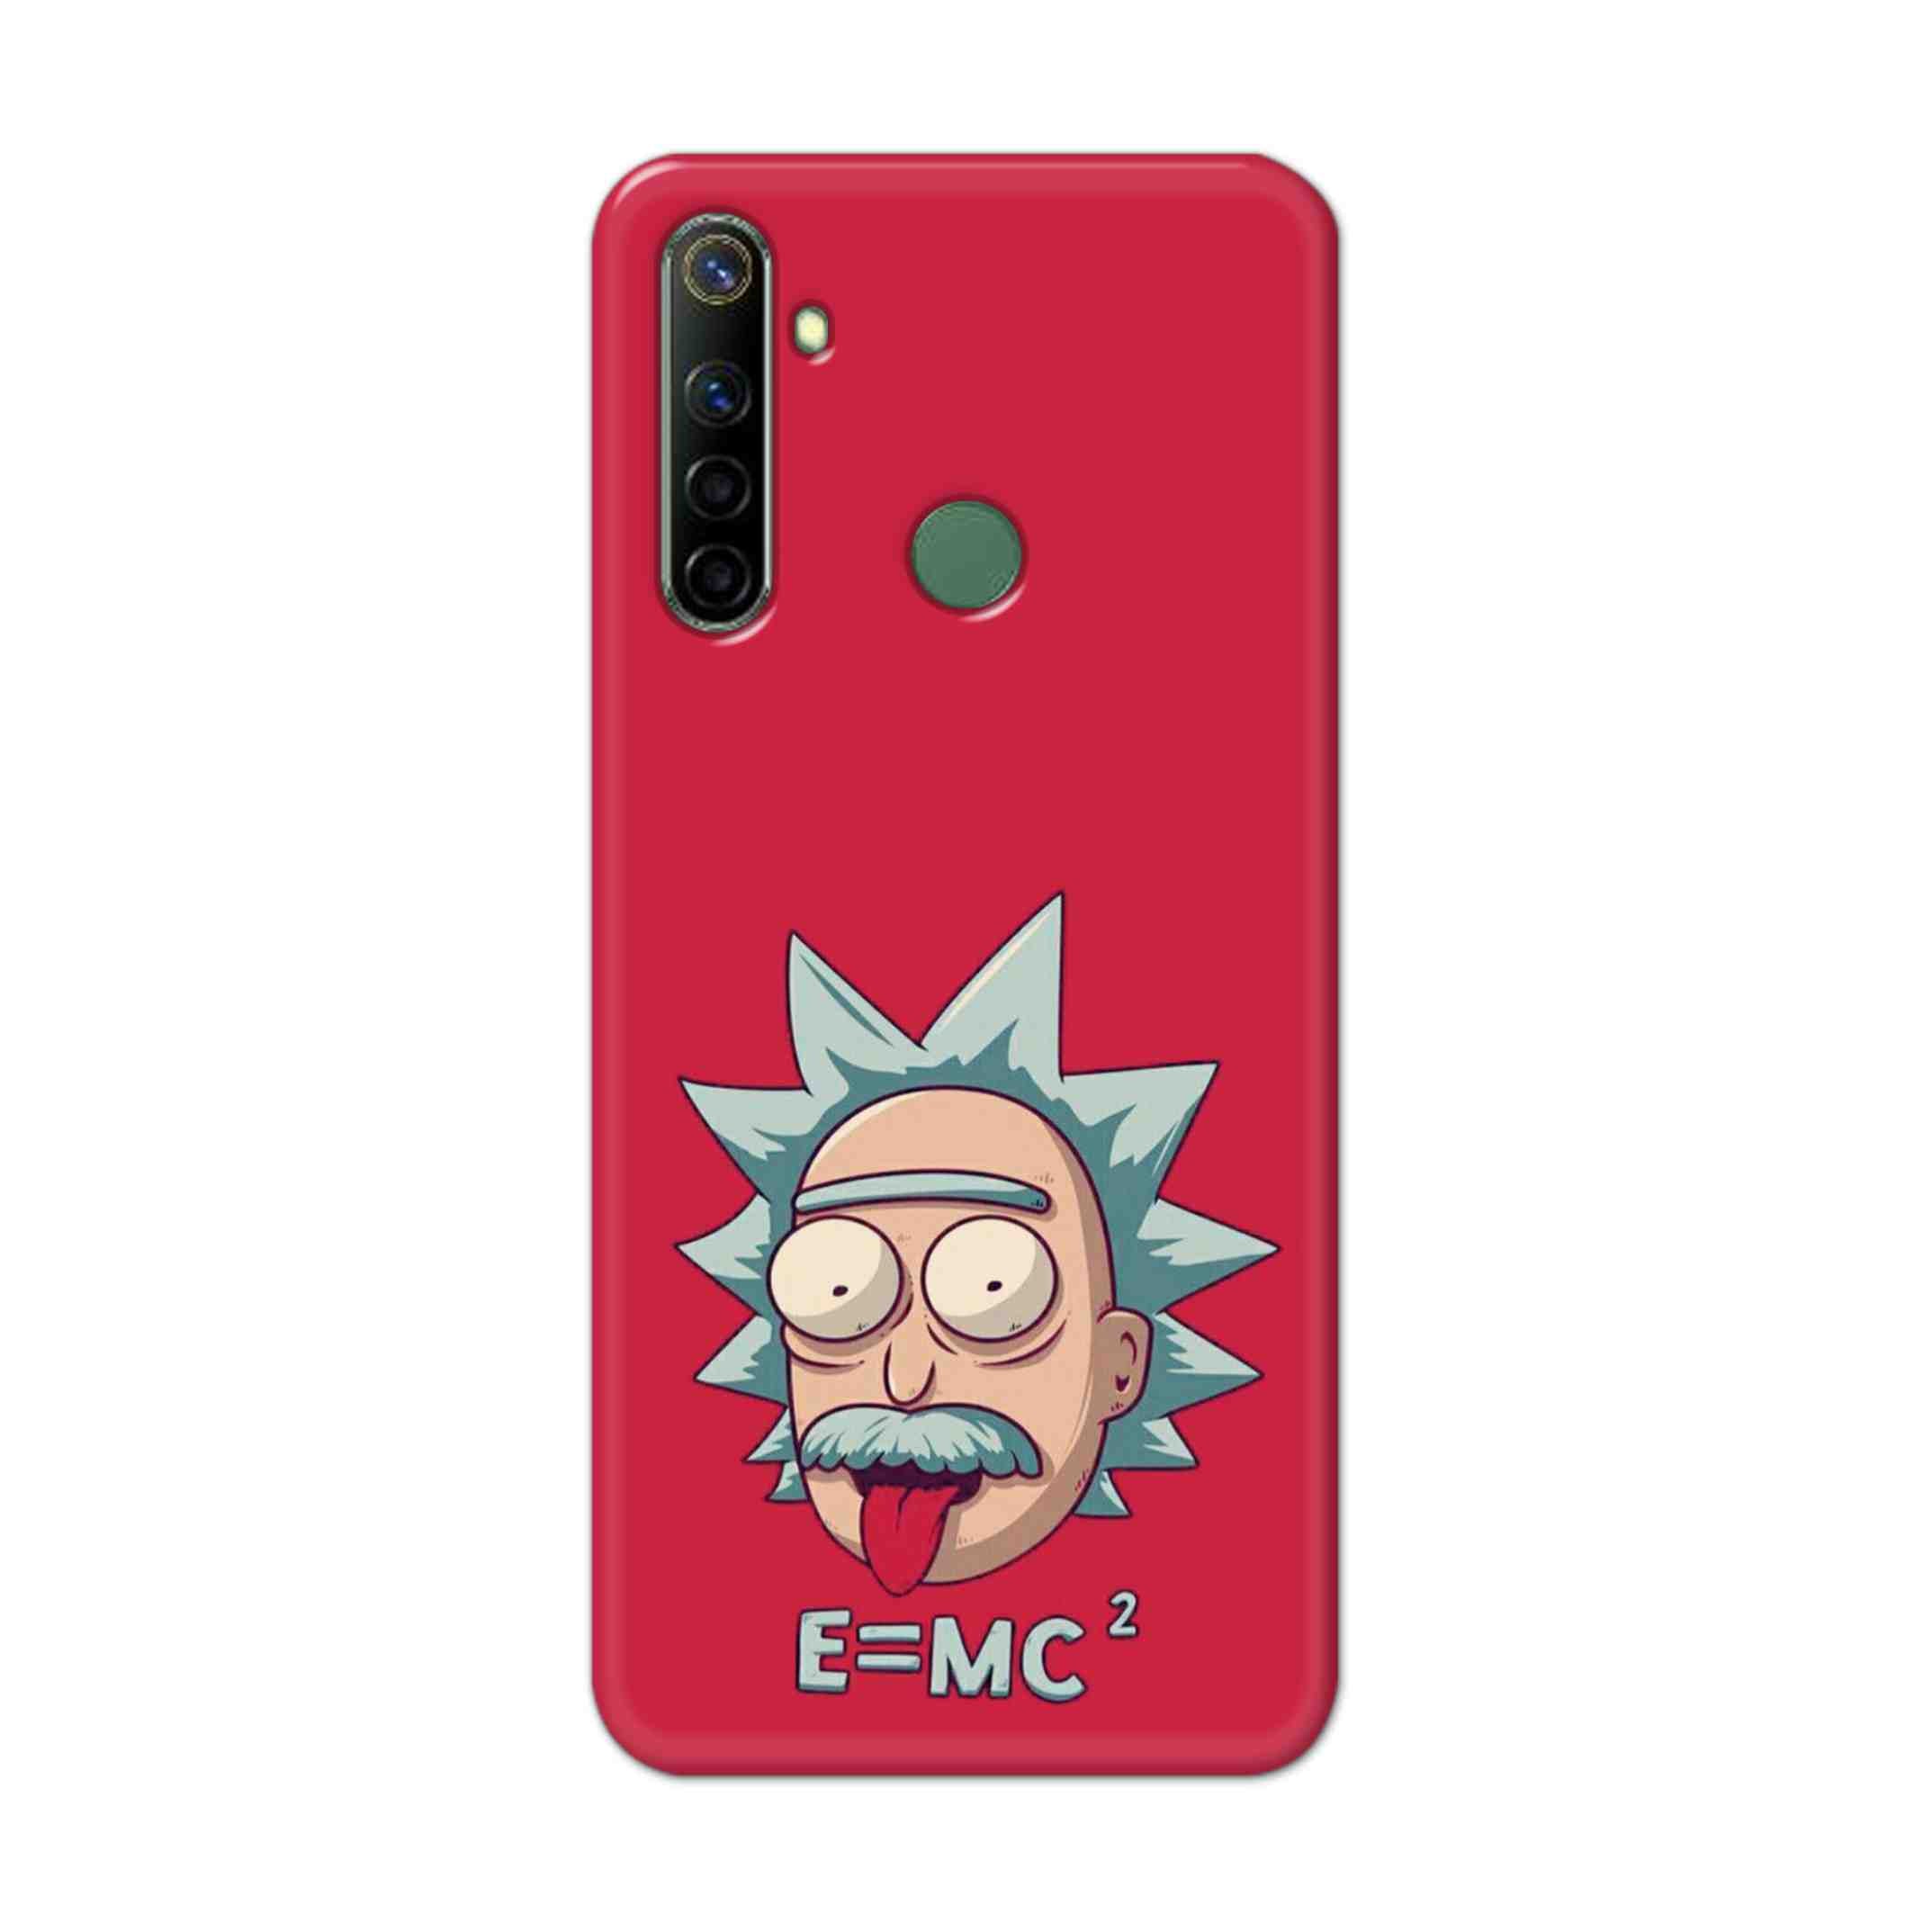 Buy E=Mc Hard Back Mobile Phone Case Cover For Realme Narzo 10a Online